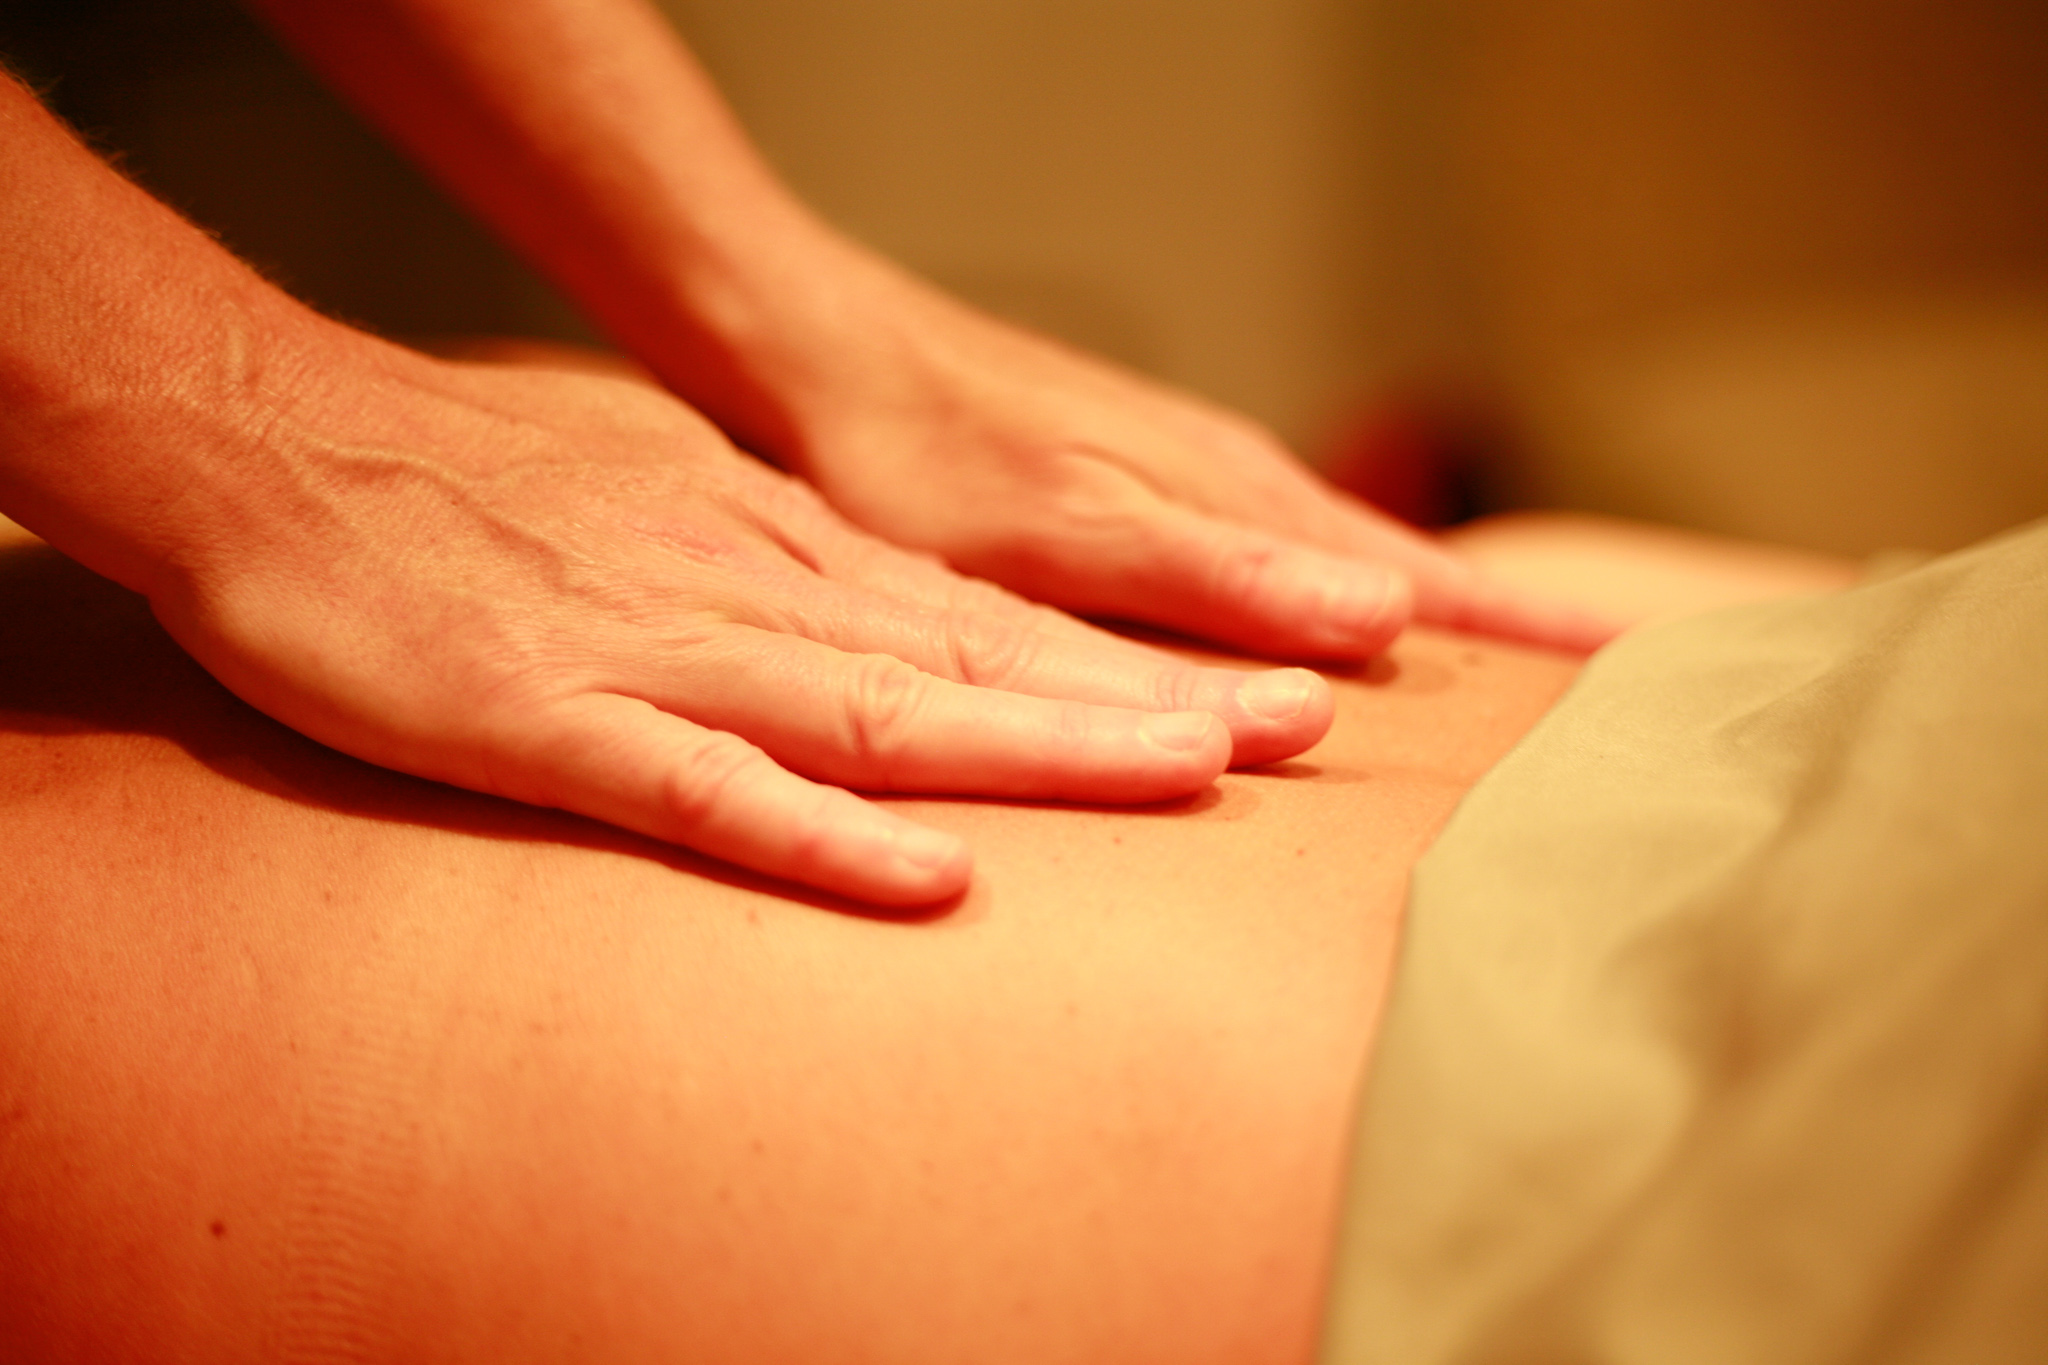 Hands on client's back massaging